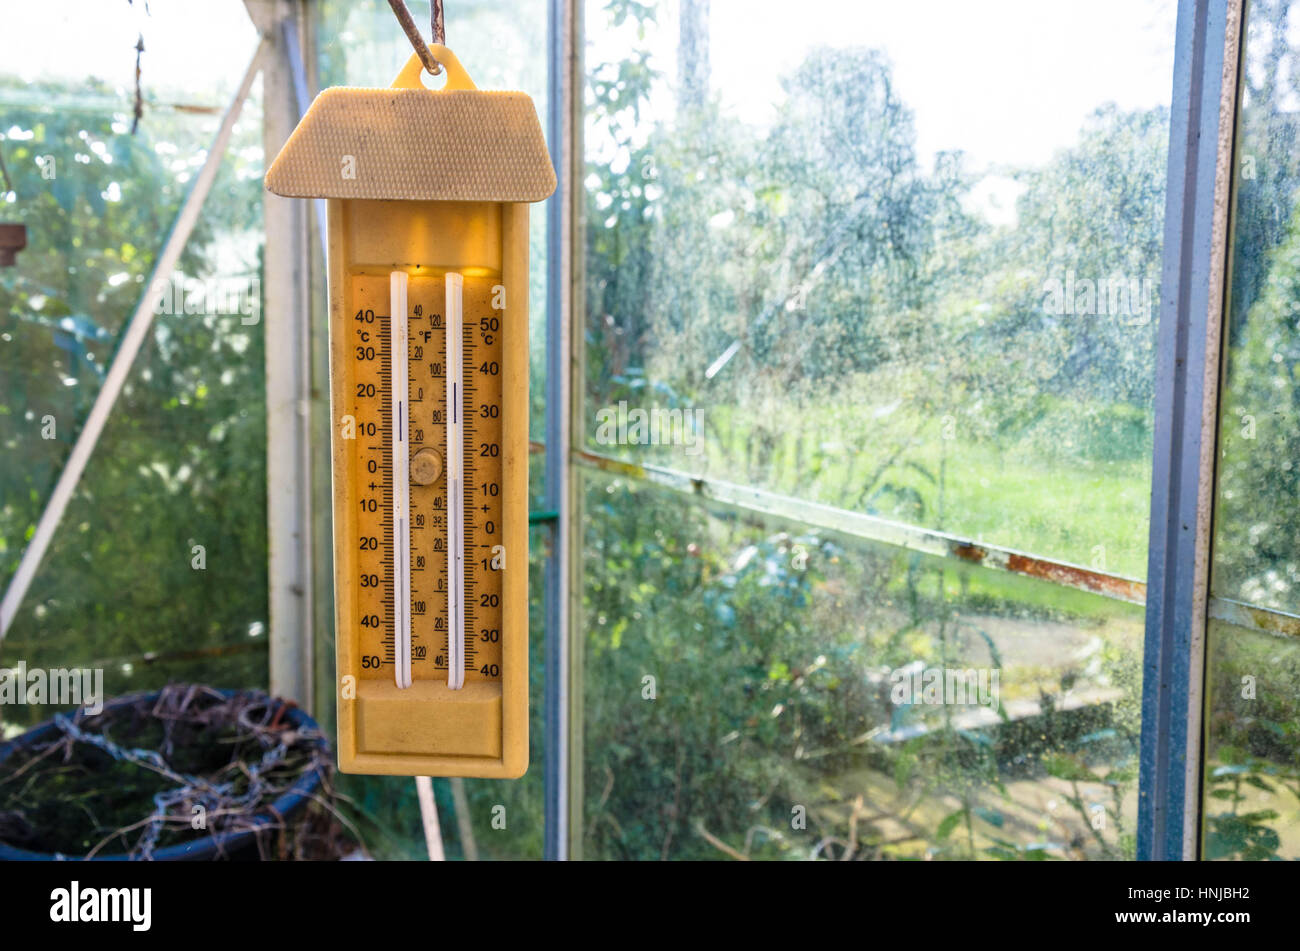 Min max thermometer -Fotos und -Bildmaterial in hoher Auflösung – Alamy